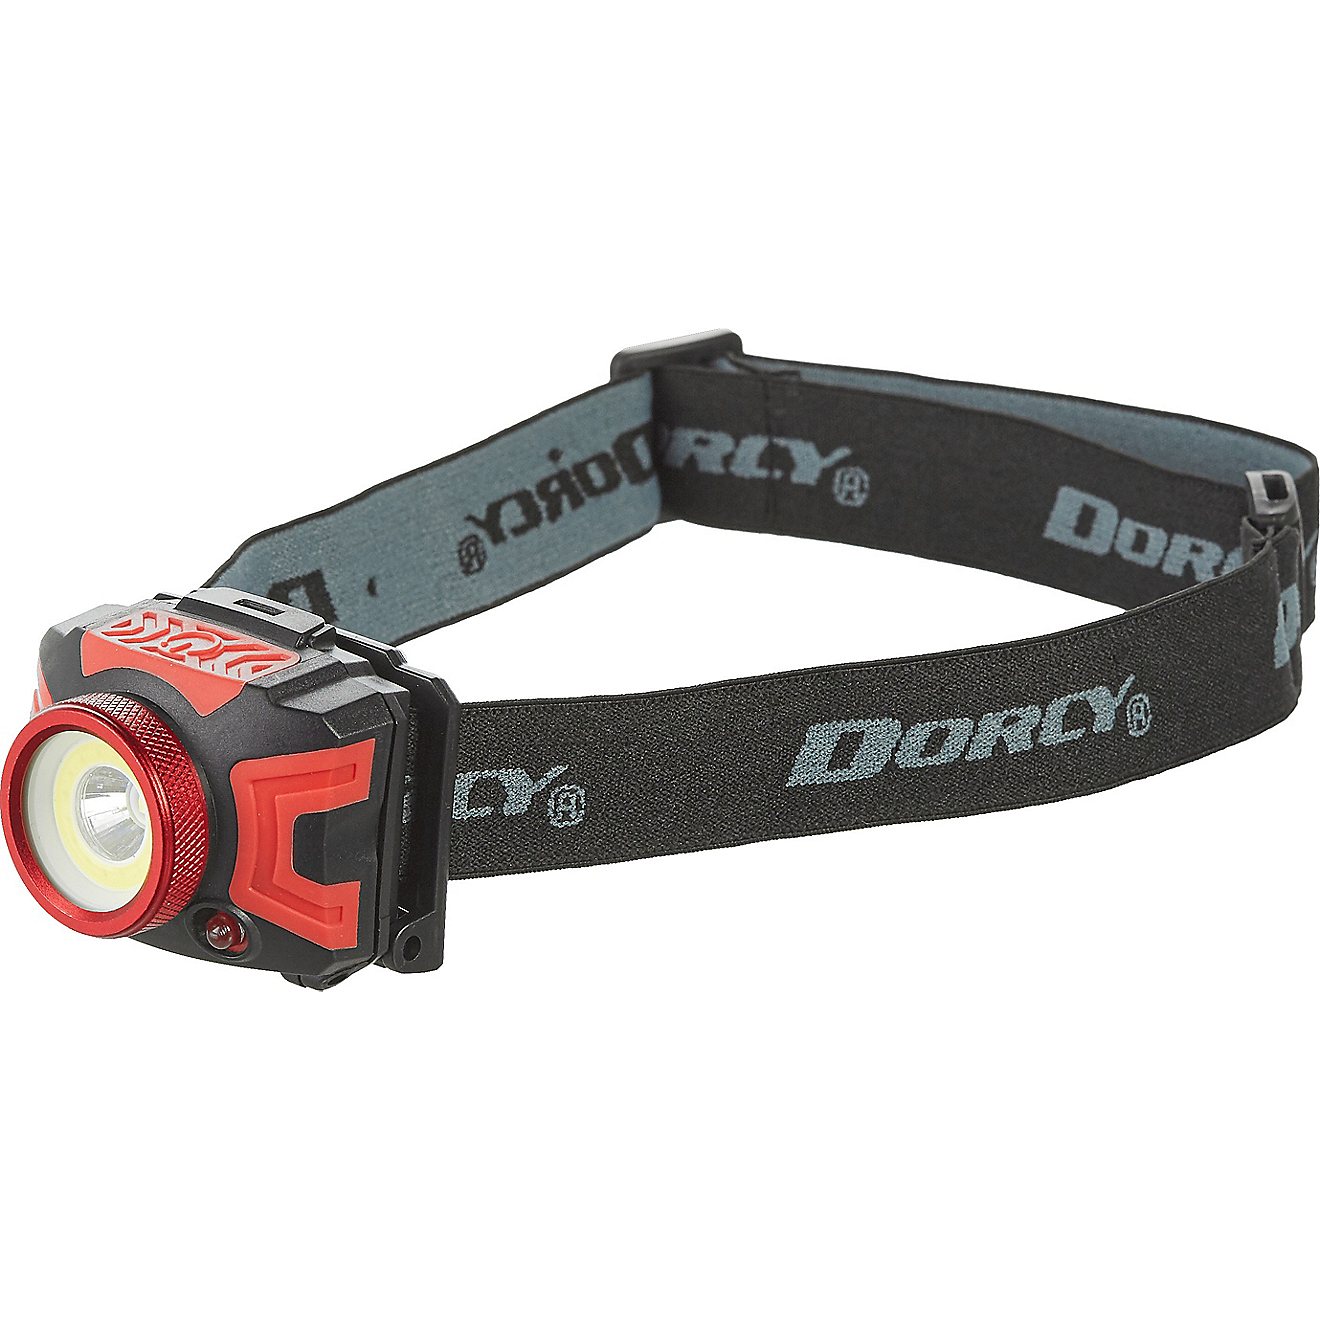 Dorcy Ultra HD UV Headlamp                                                                                                       - view number 1